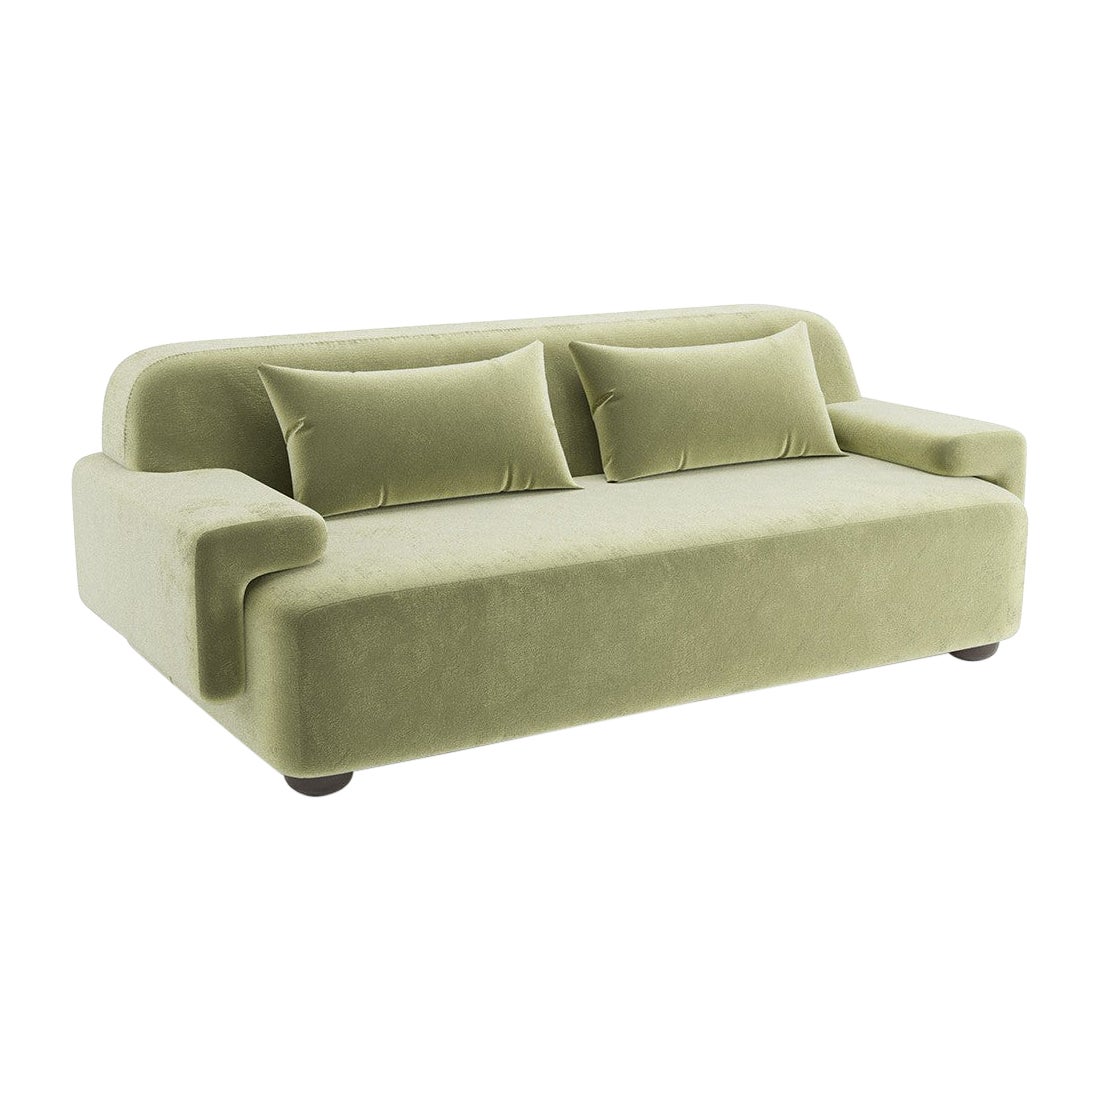 Popus Editions Lena 3 Seater Sofa in Almond Green Como Velvet Upholstery